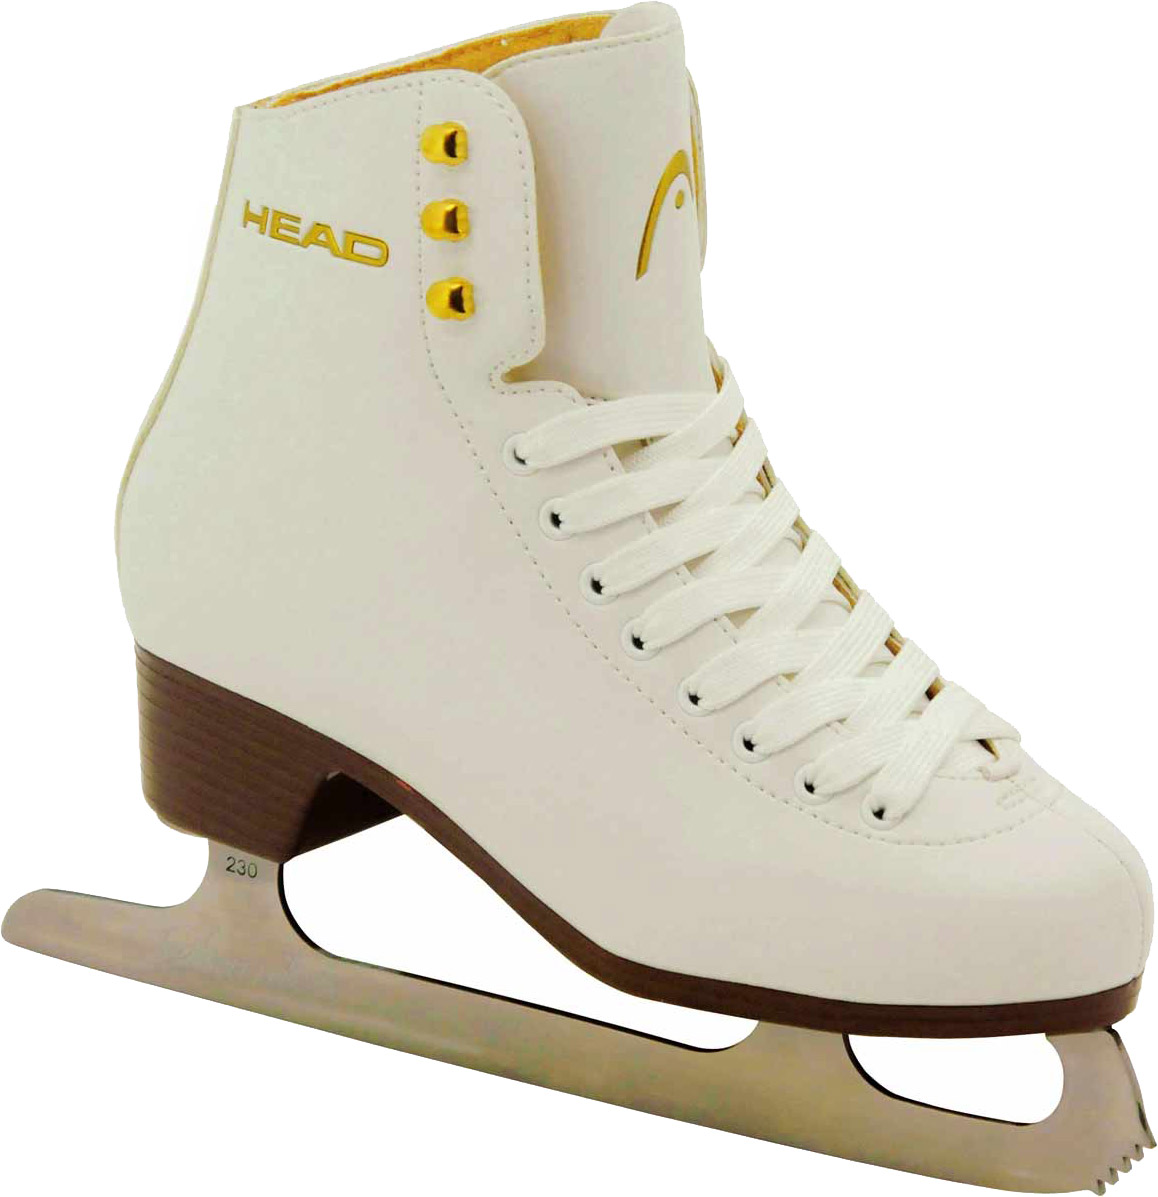 DONNA JR - Ice skates